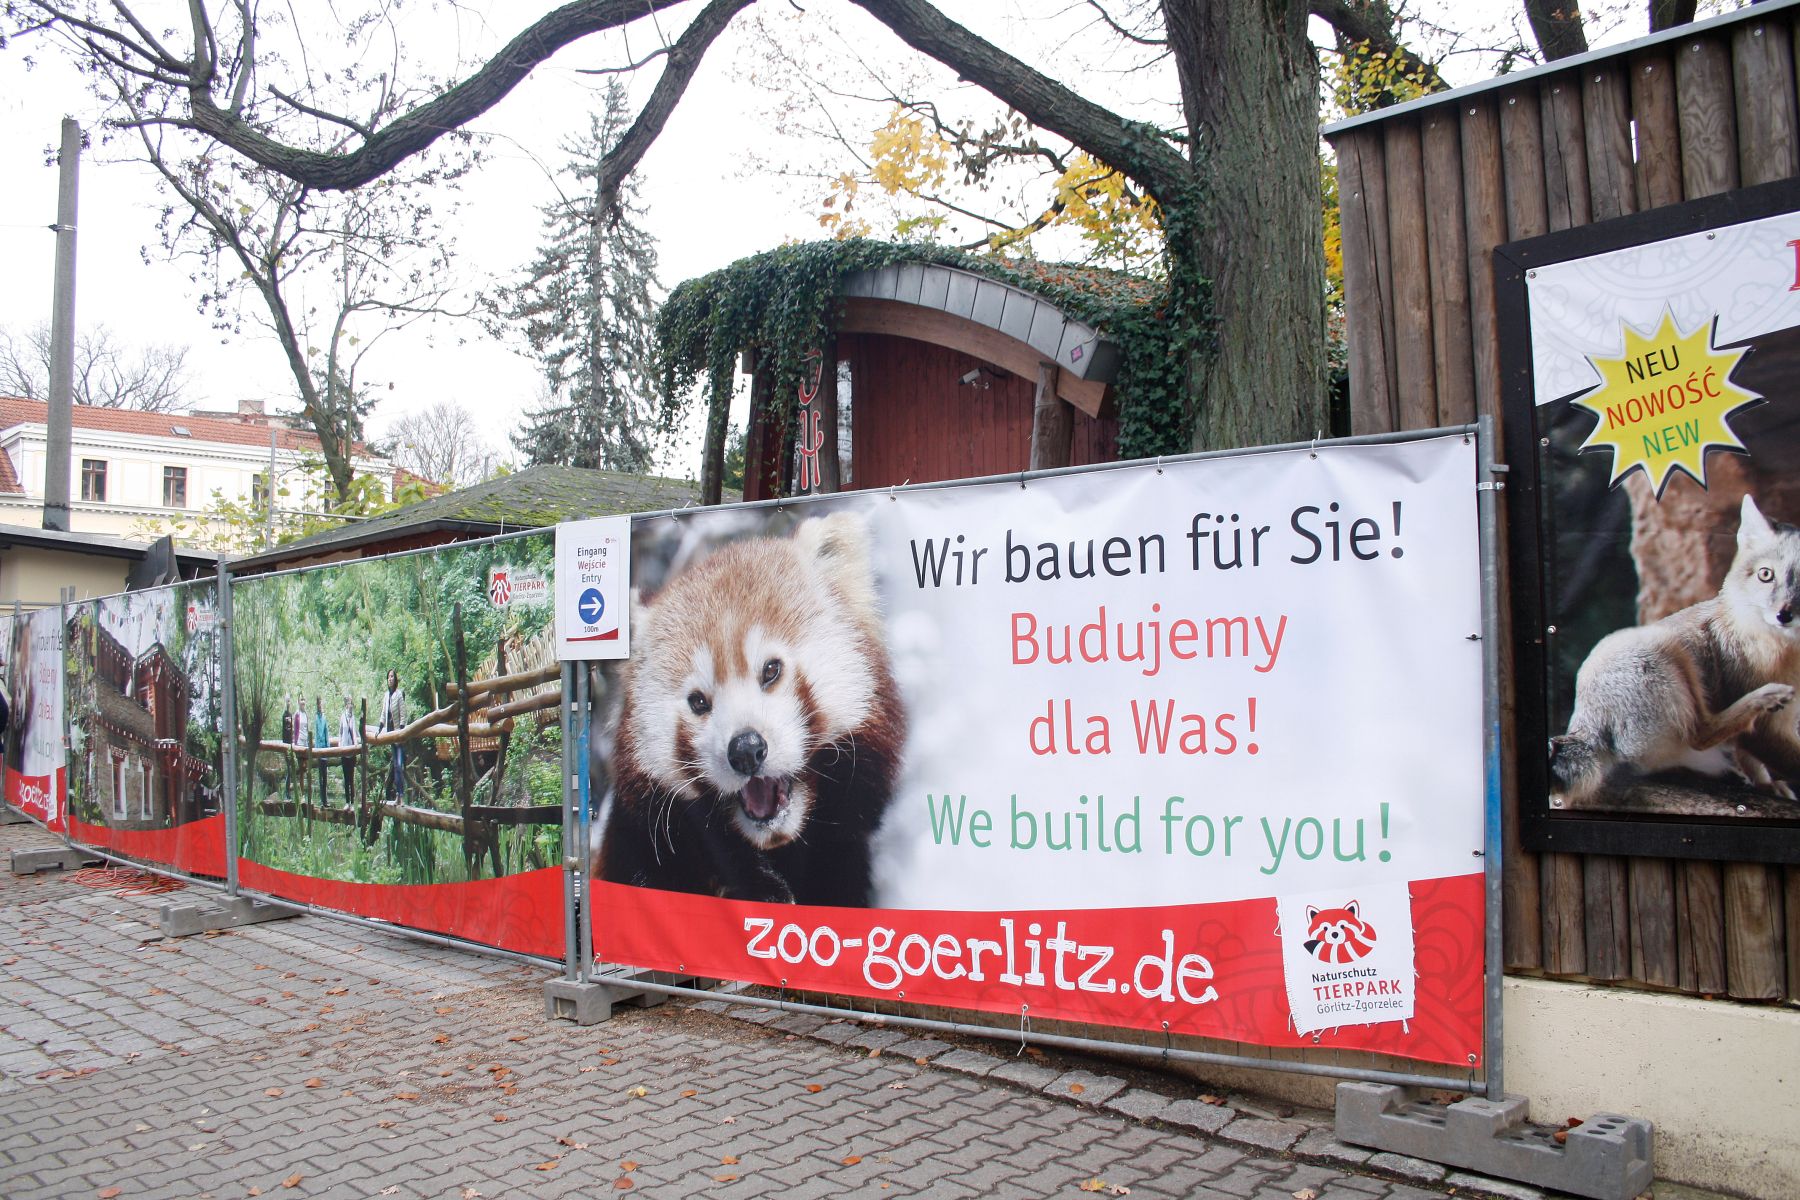 fot. www.zoo-goerlitz.de, I. Plath